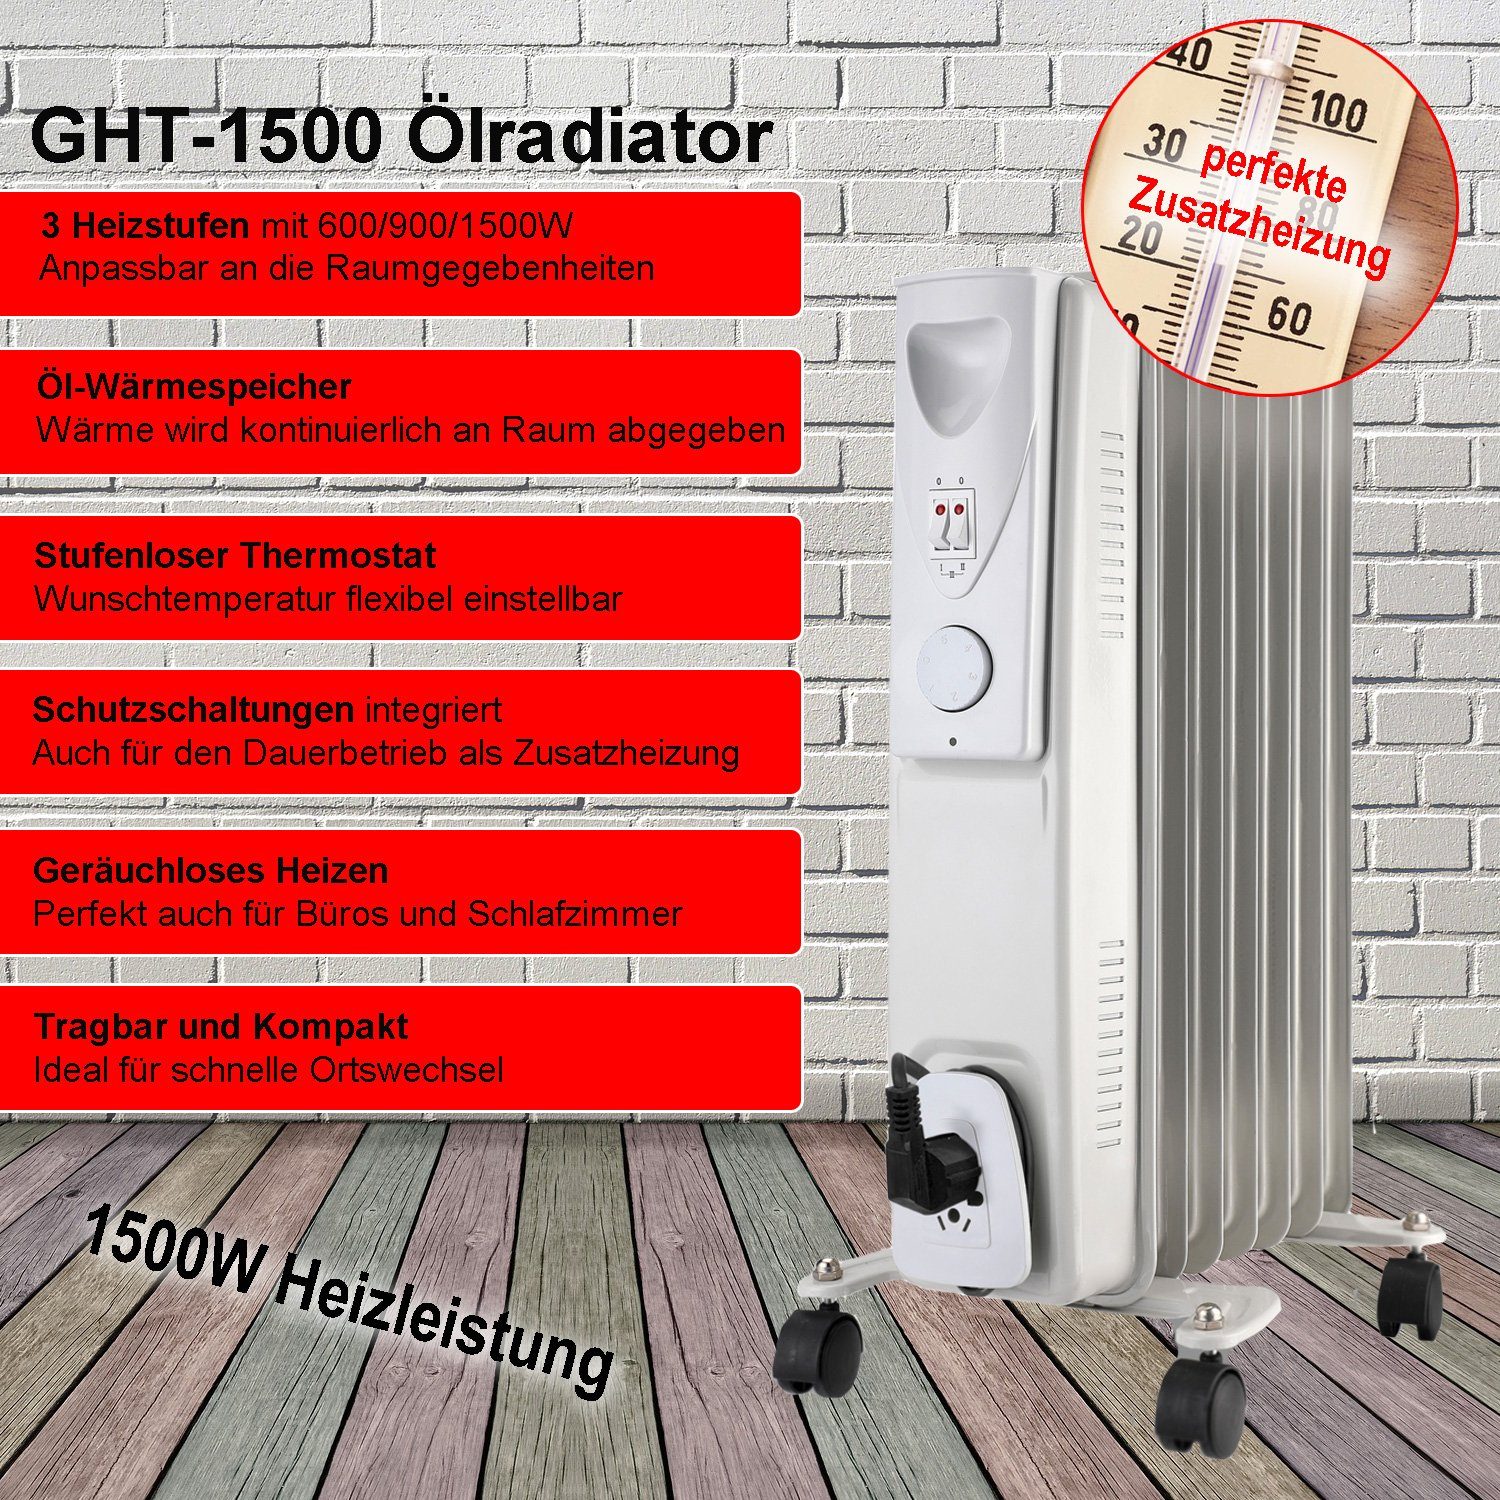 Ölradiator - Ölradiator - Speicherofen elektrische Zusatzheizung - Heizung 1500w GORANDO